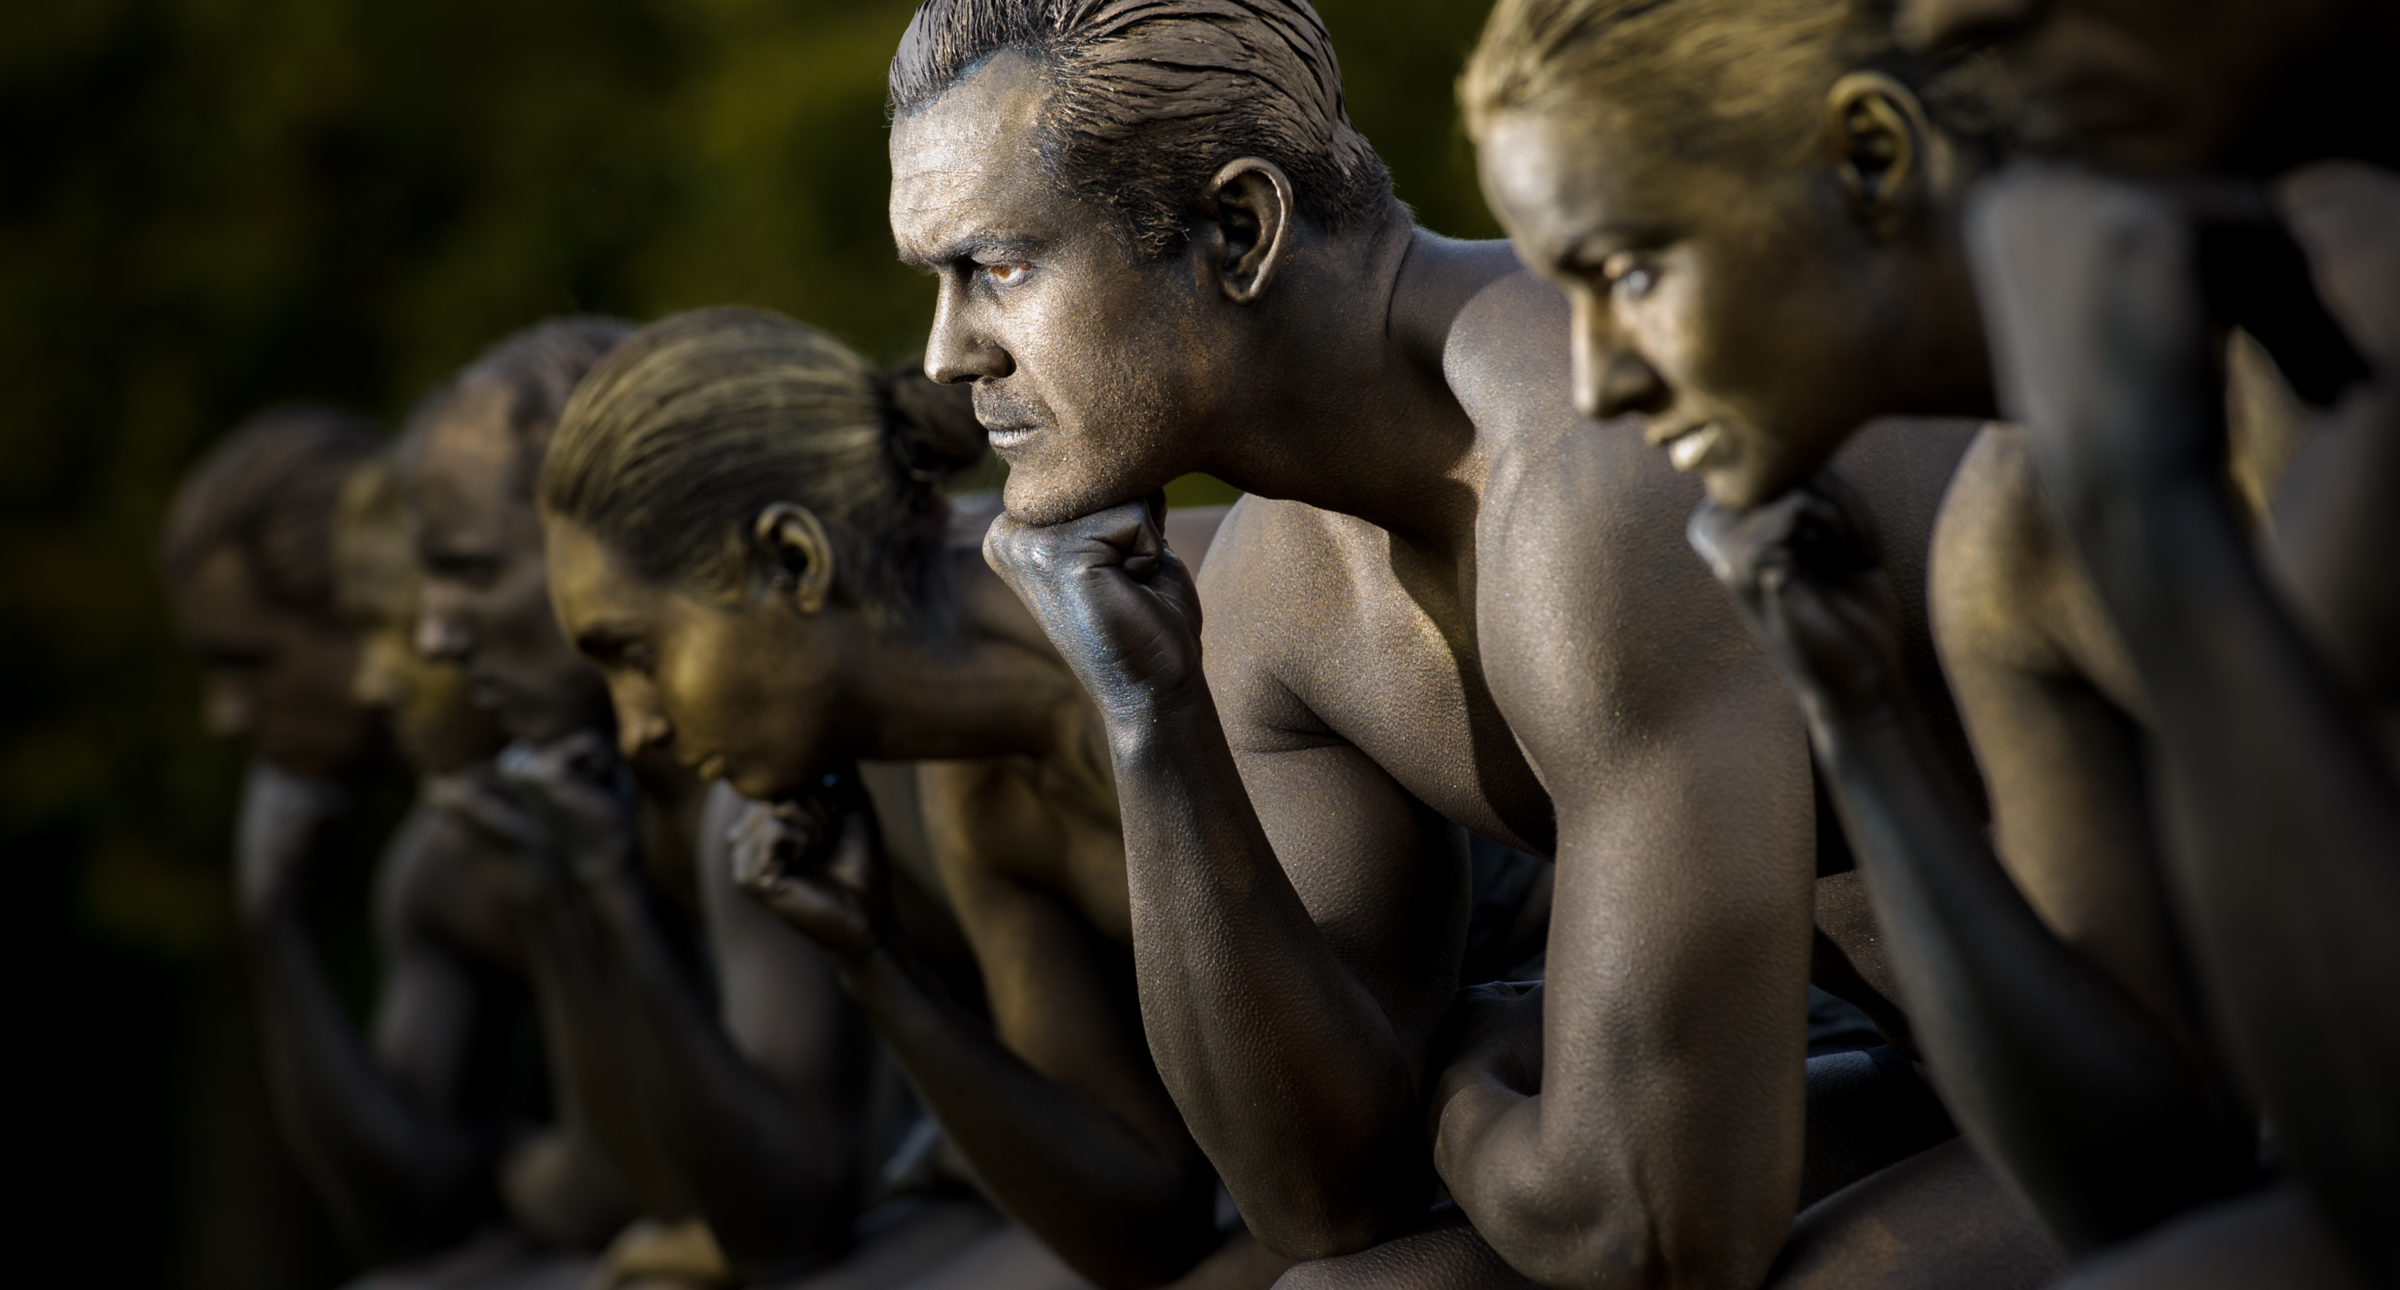 Nine models posed as Rodin's Thinker